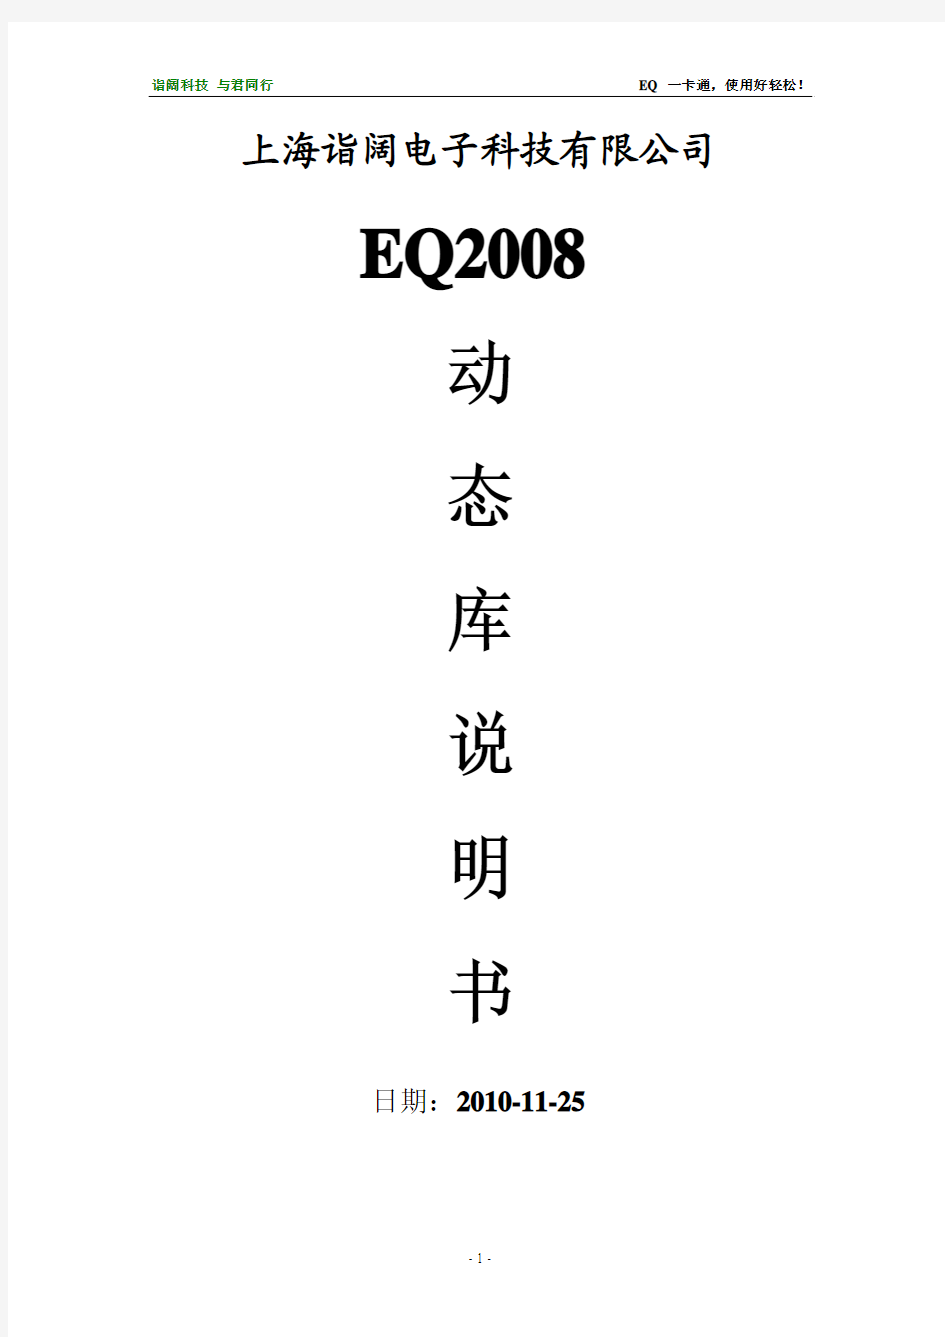 EQ2008动态库说明